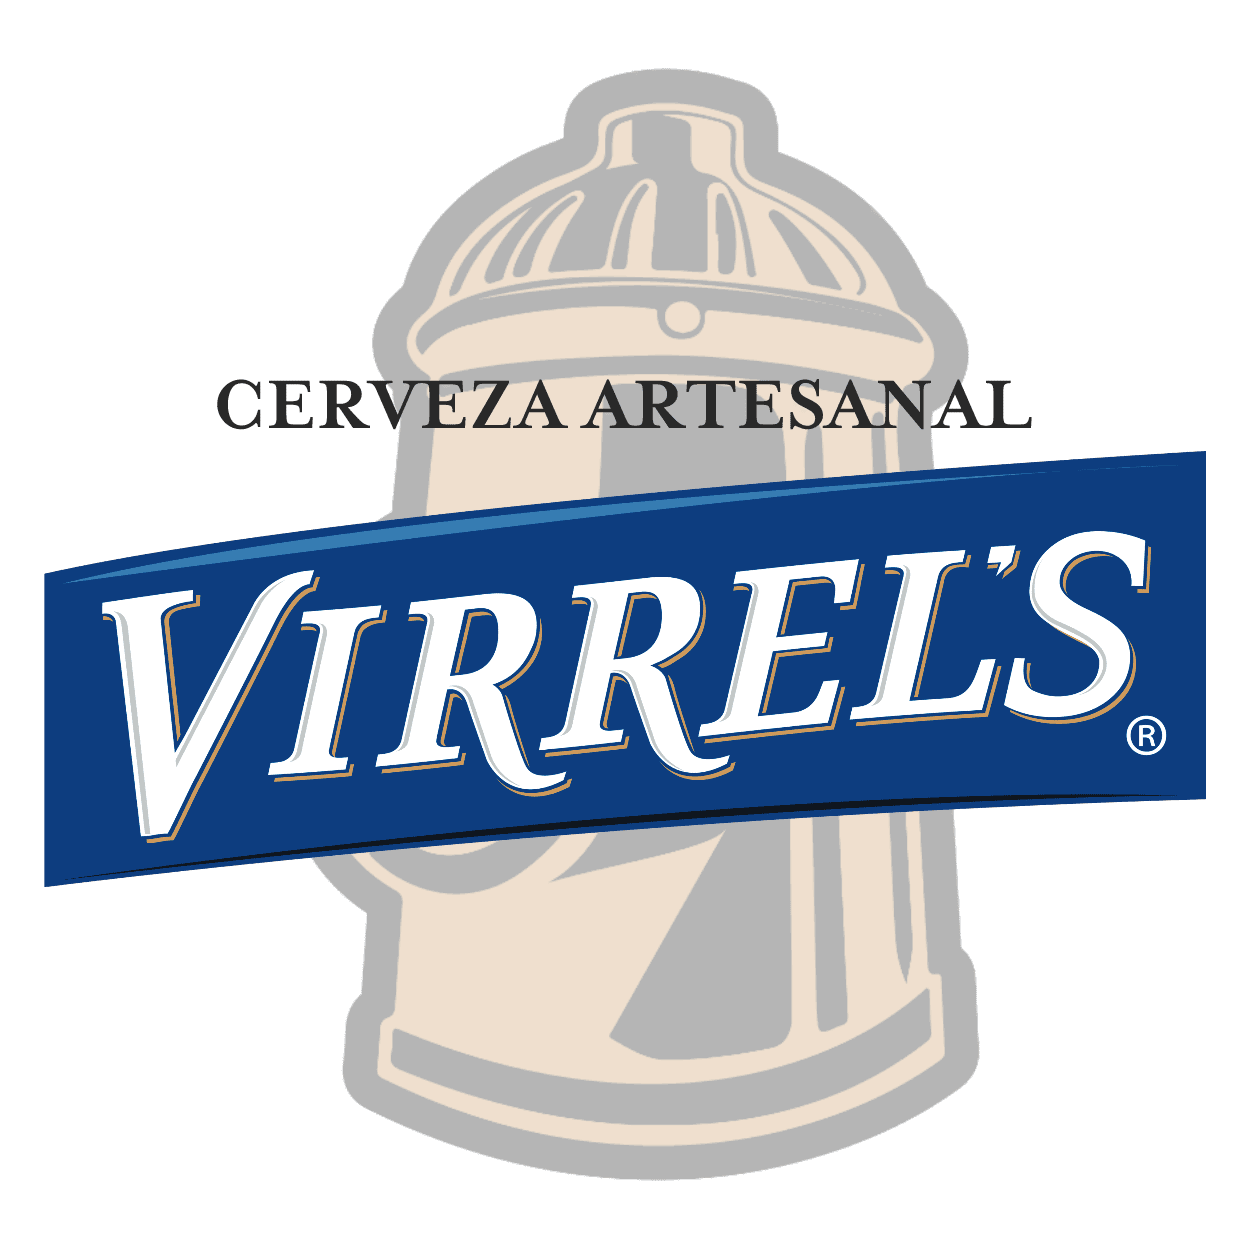 Virrel's Cerveza Artesanal